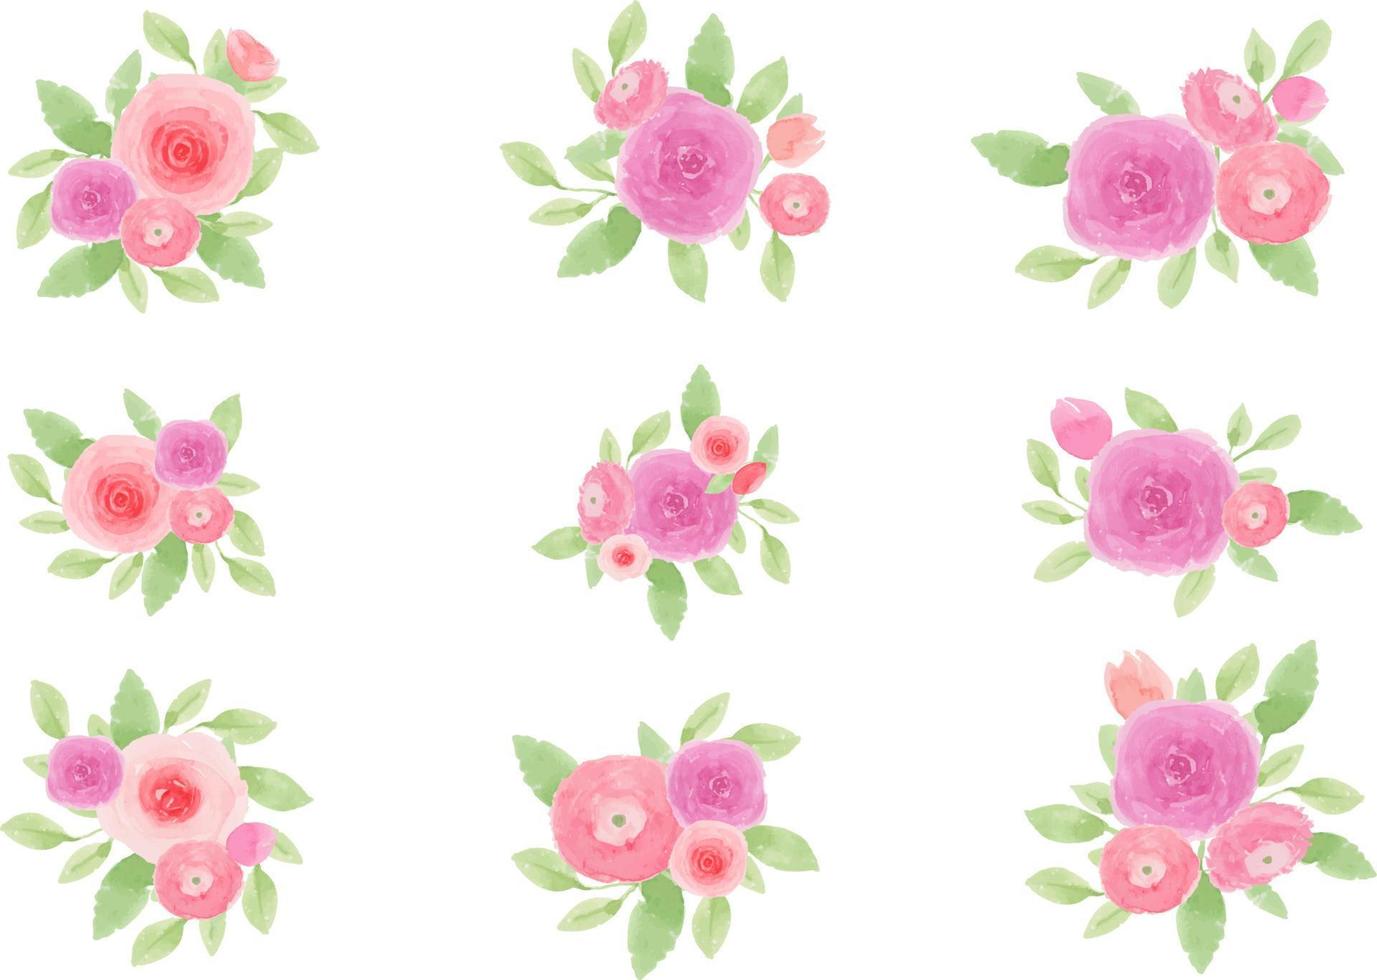 Rose Arrangement Watercolor Set vector